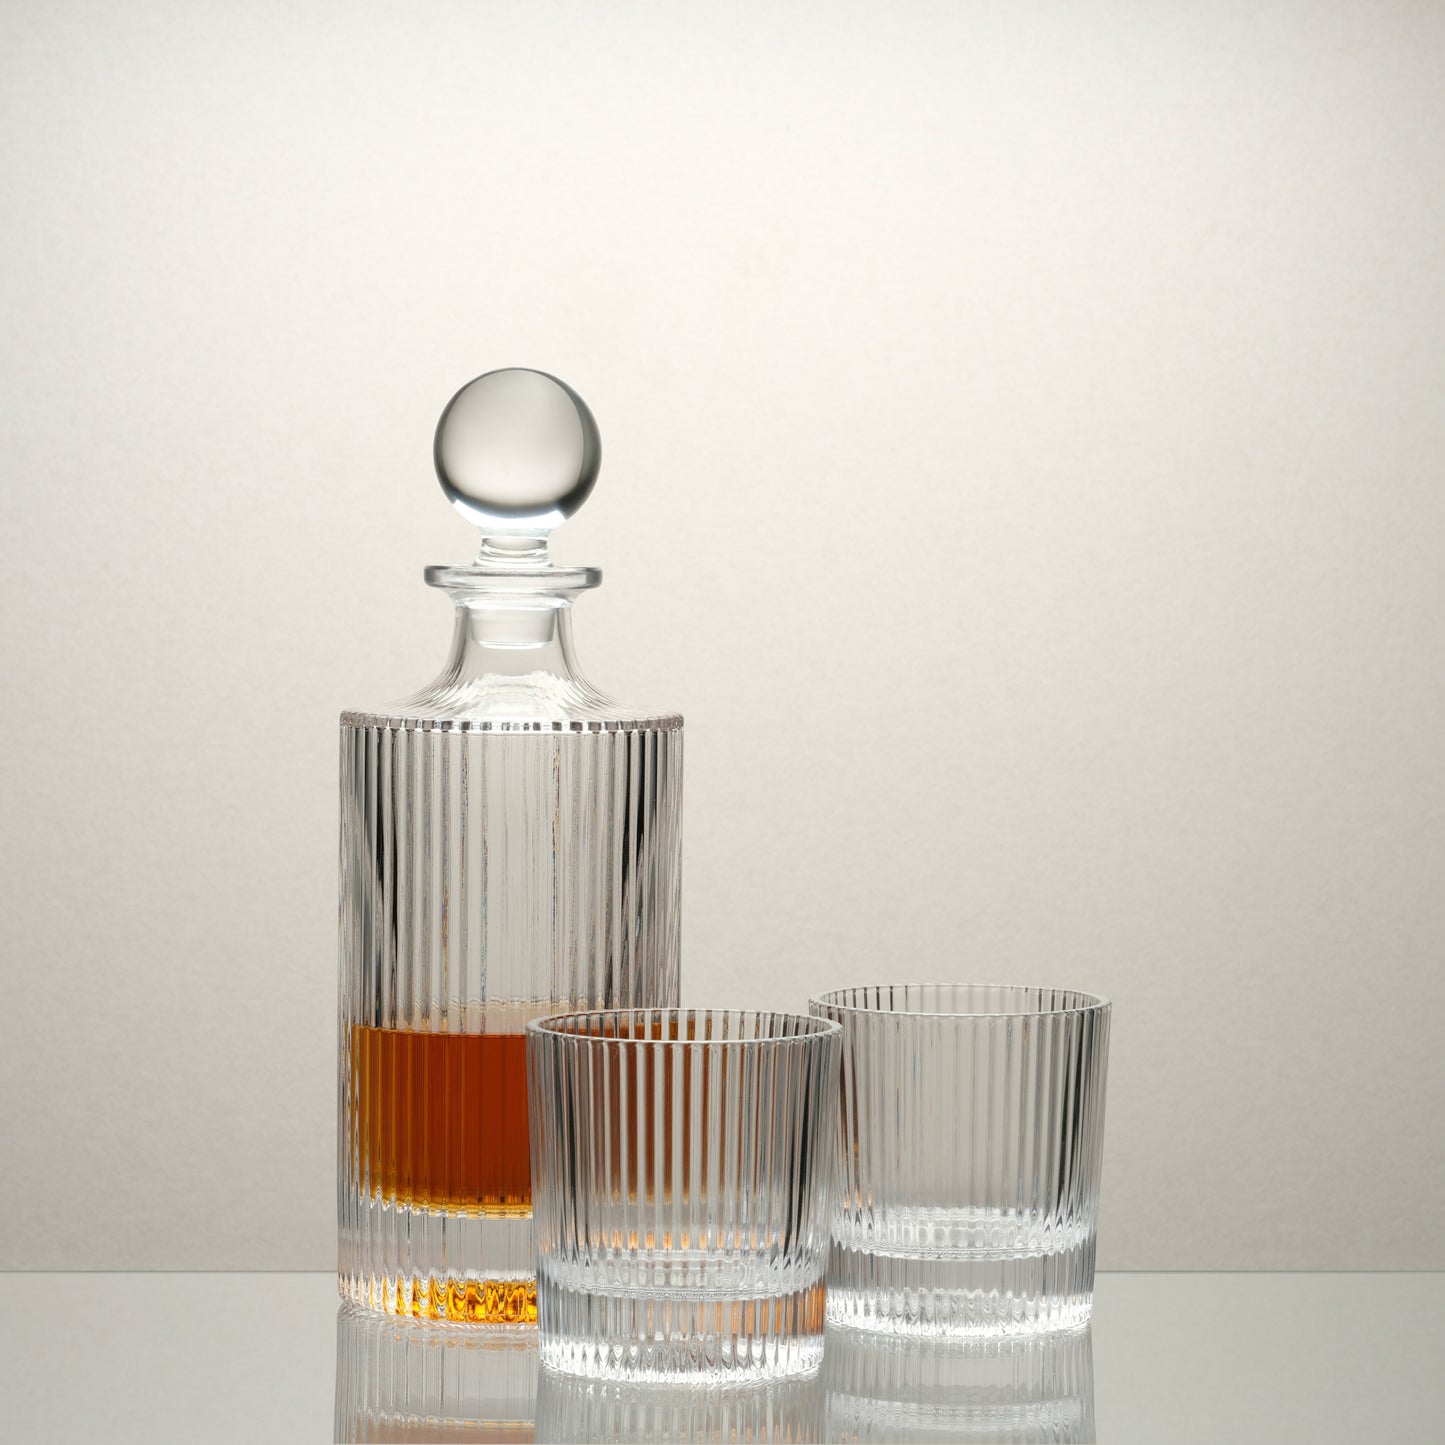 M&B Flinders Ranges Crystal Whisky Decanter